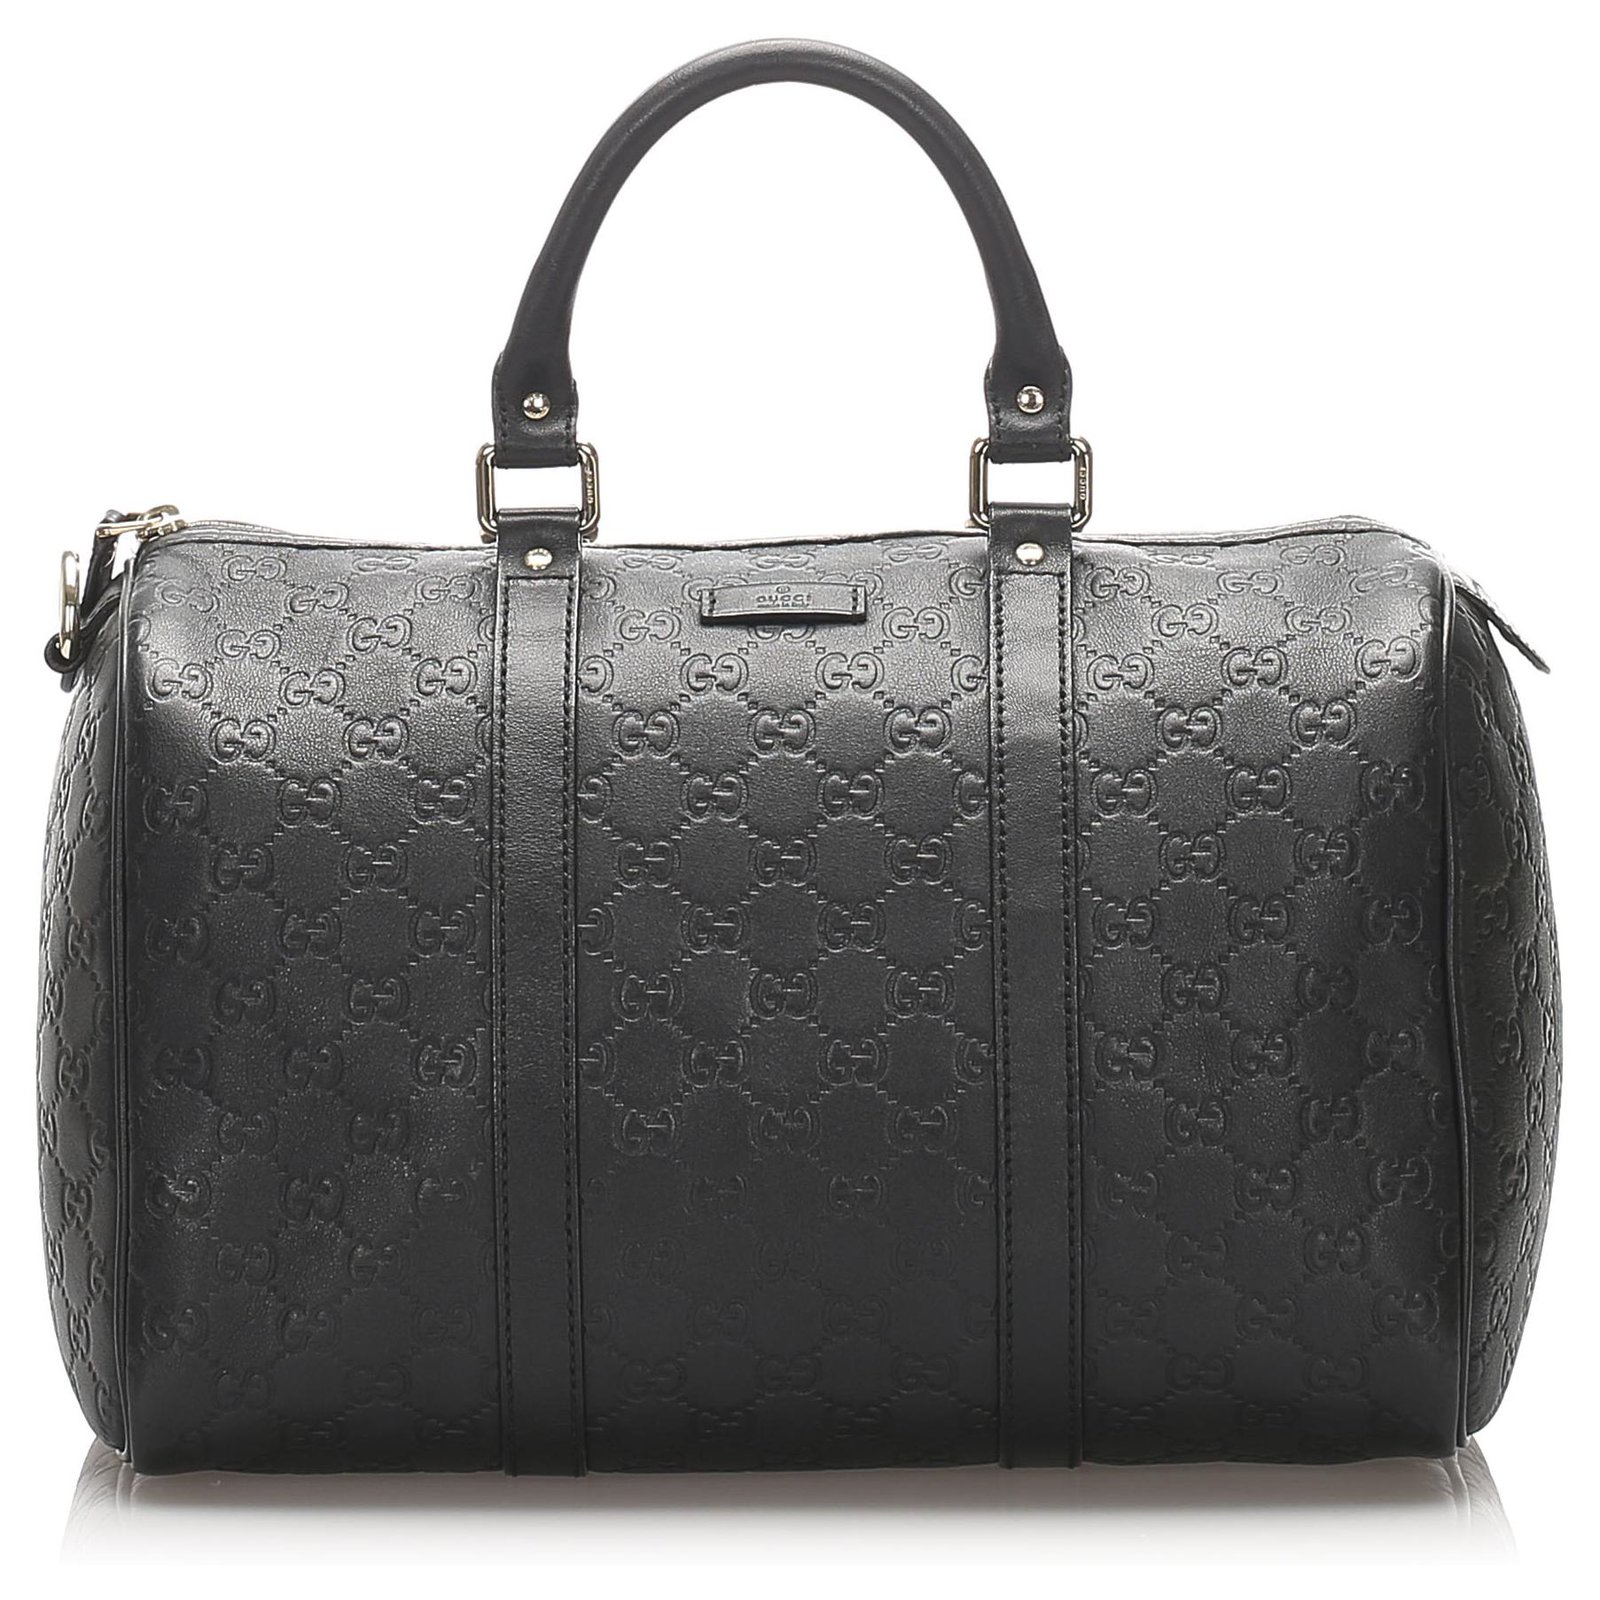 Gucci Black Guccissima Leather Joy Boston Bag Pony-style calfskin